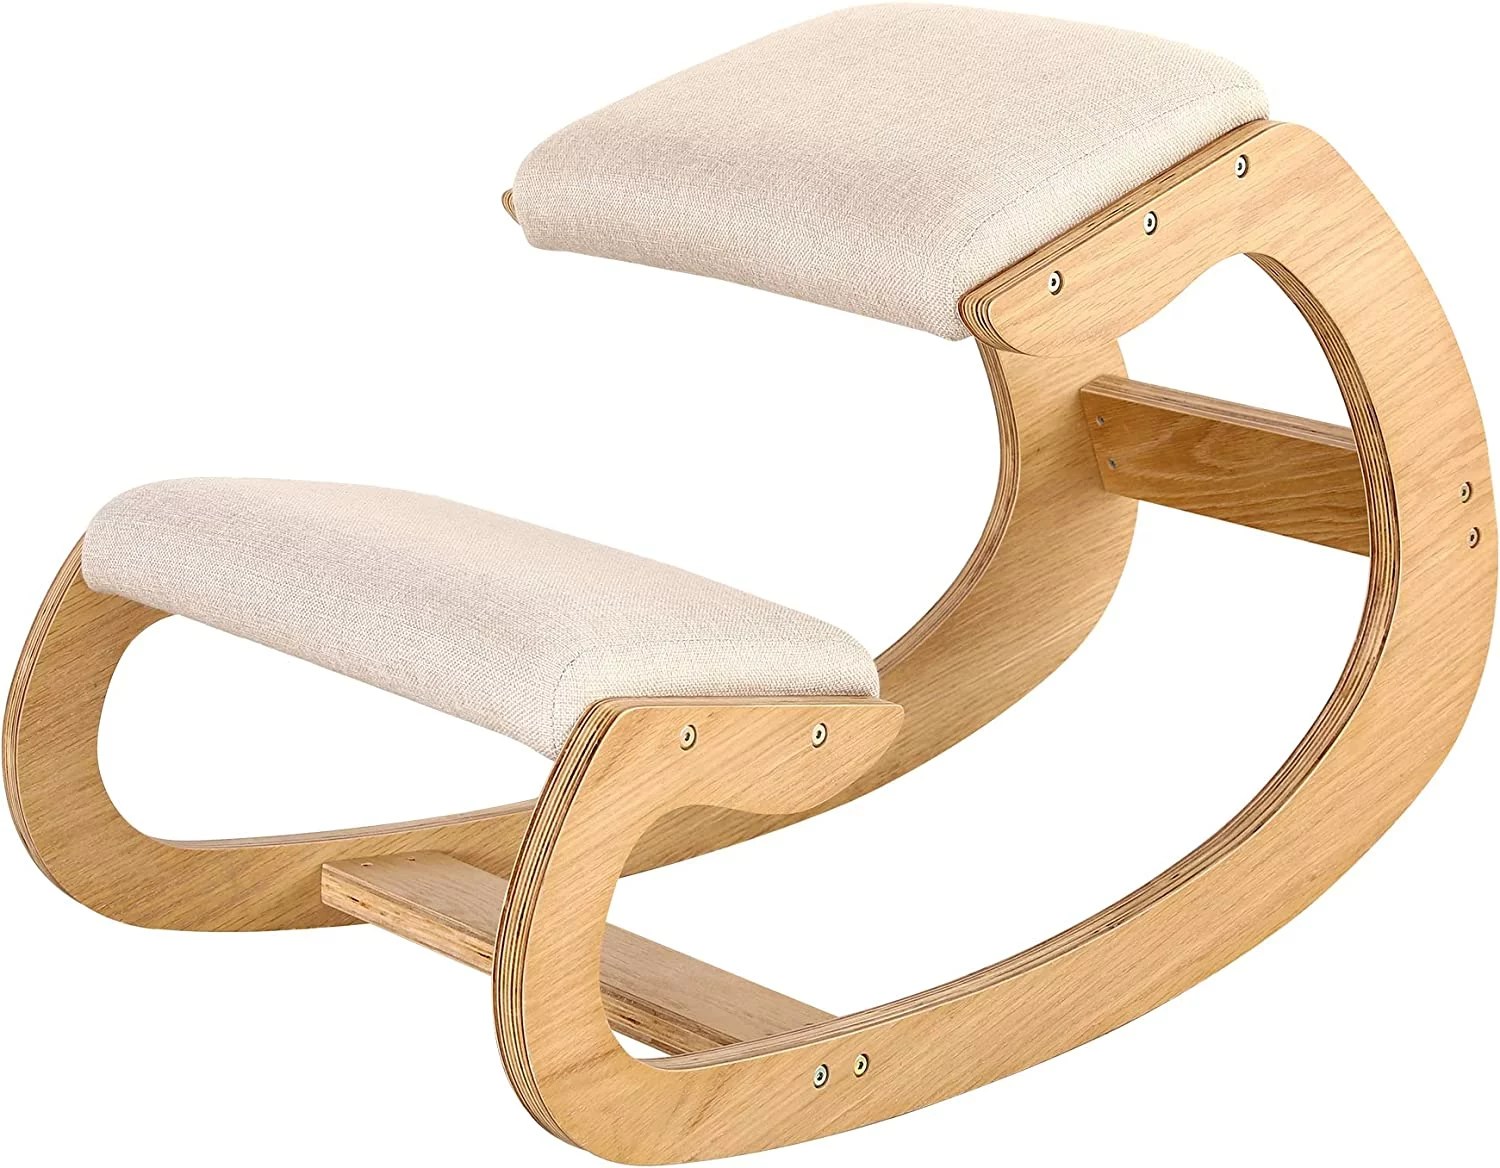 predawn ergonomic kneeling chair